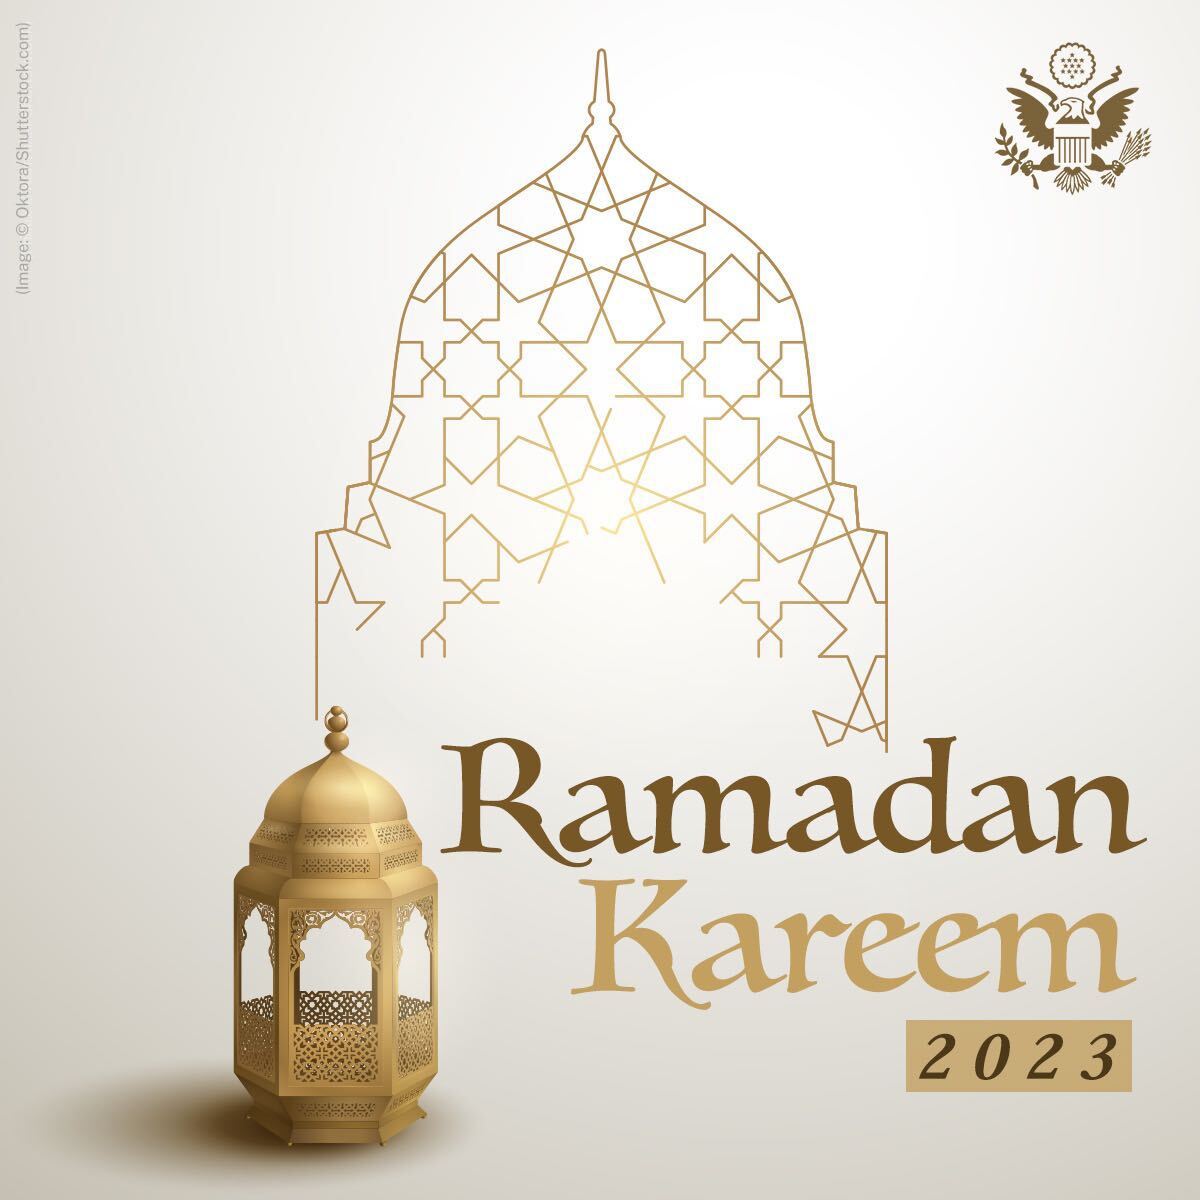 Collection of 999+ Stunning Ramadan Kareem Images – Full 4K Resolution